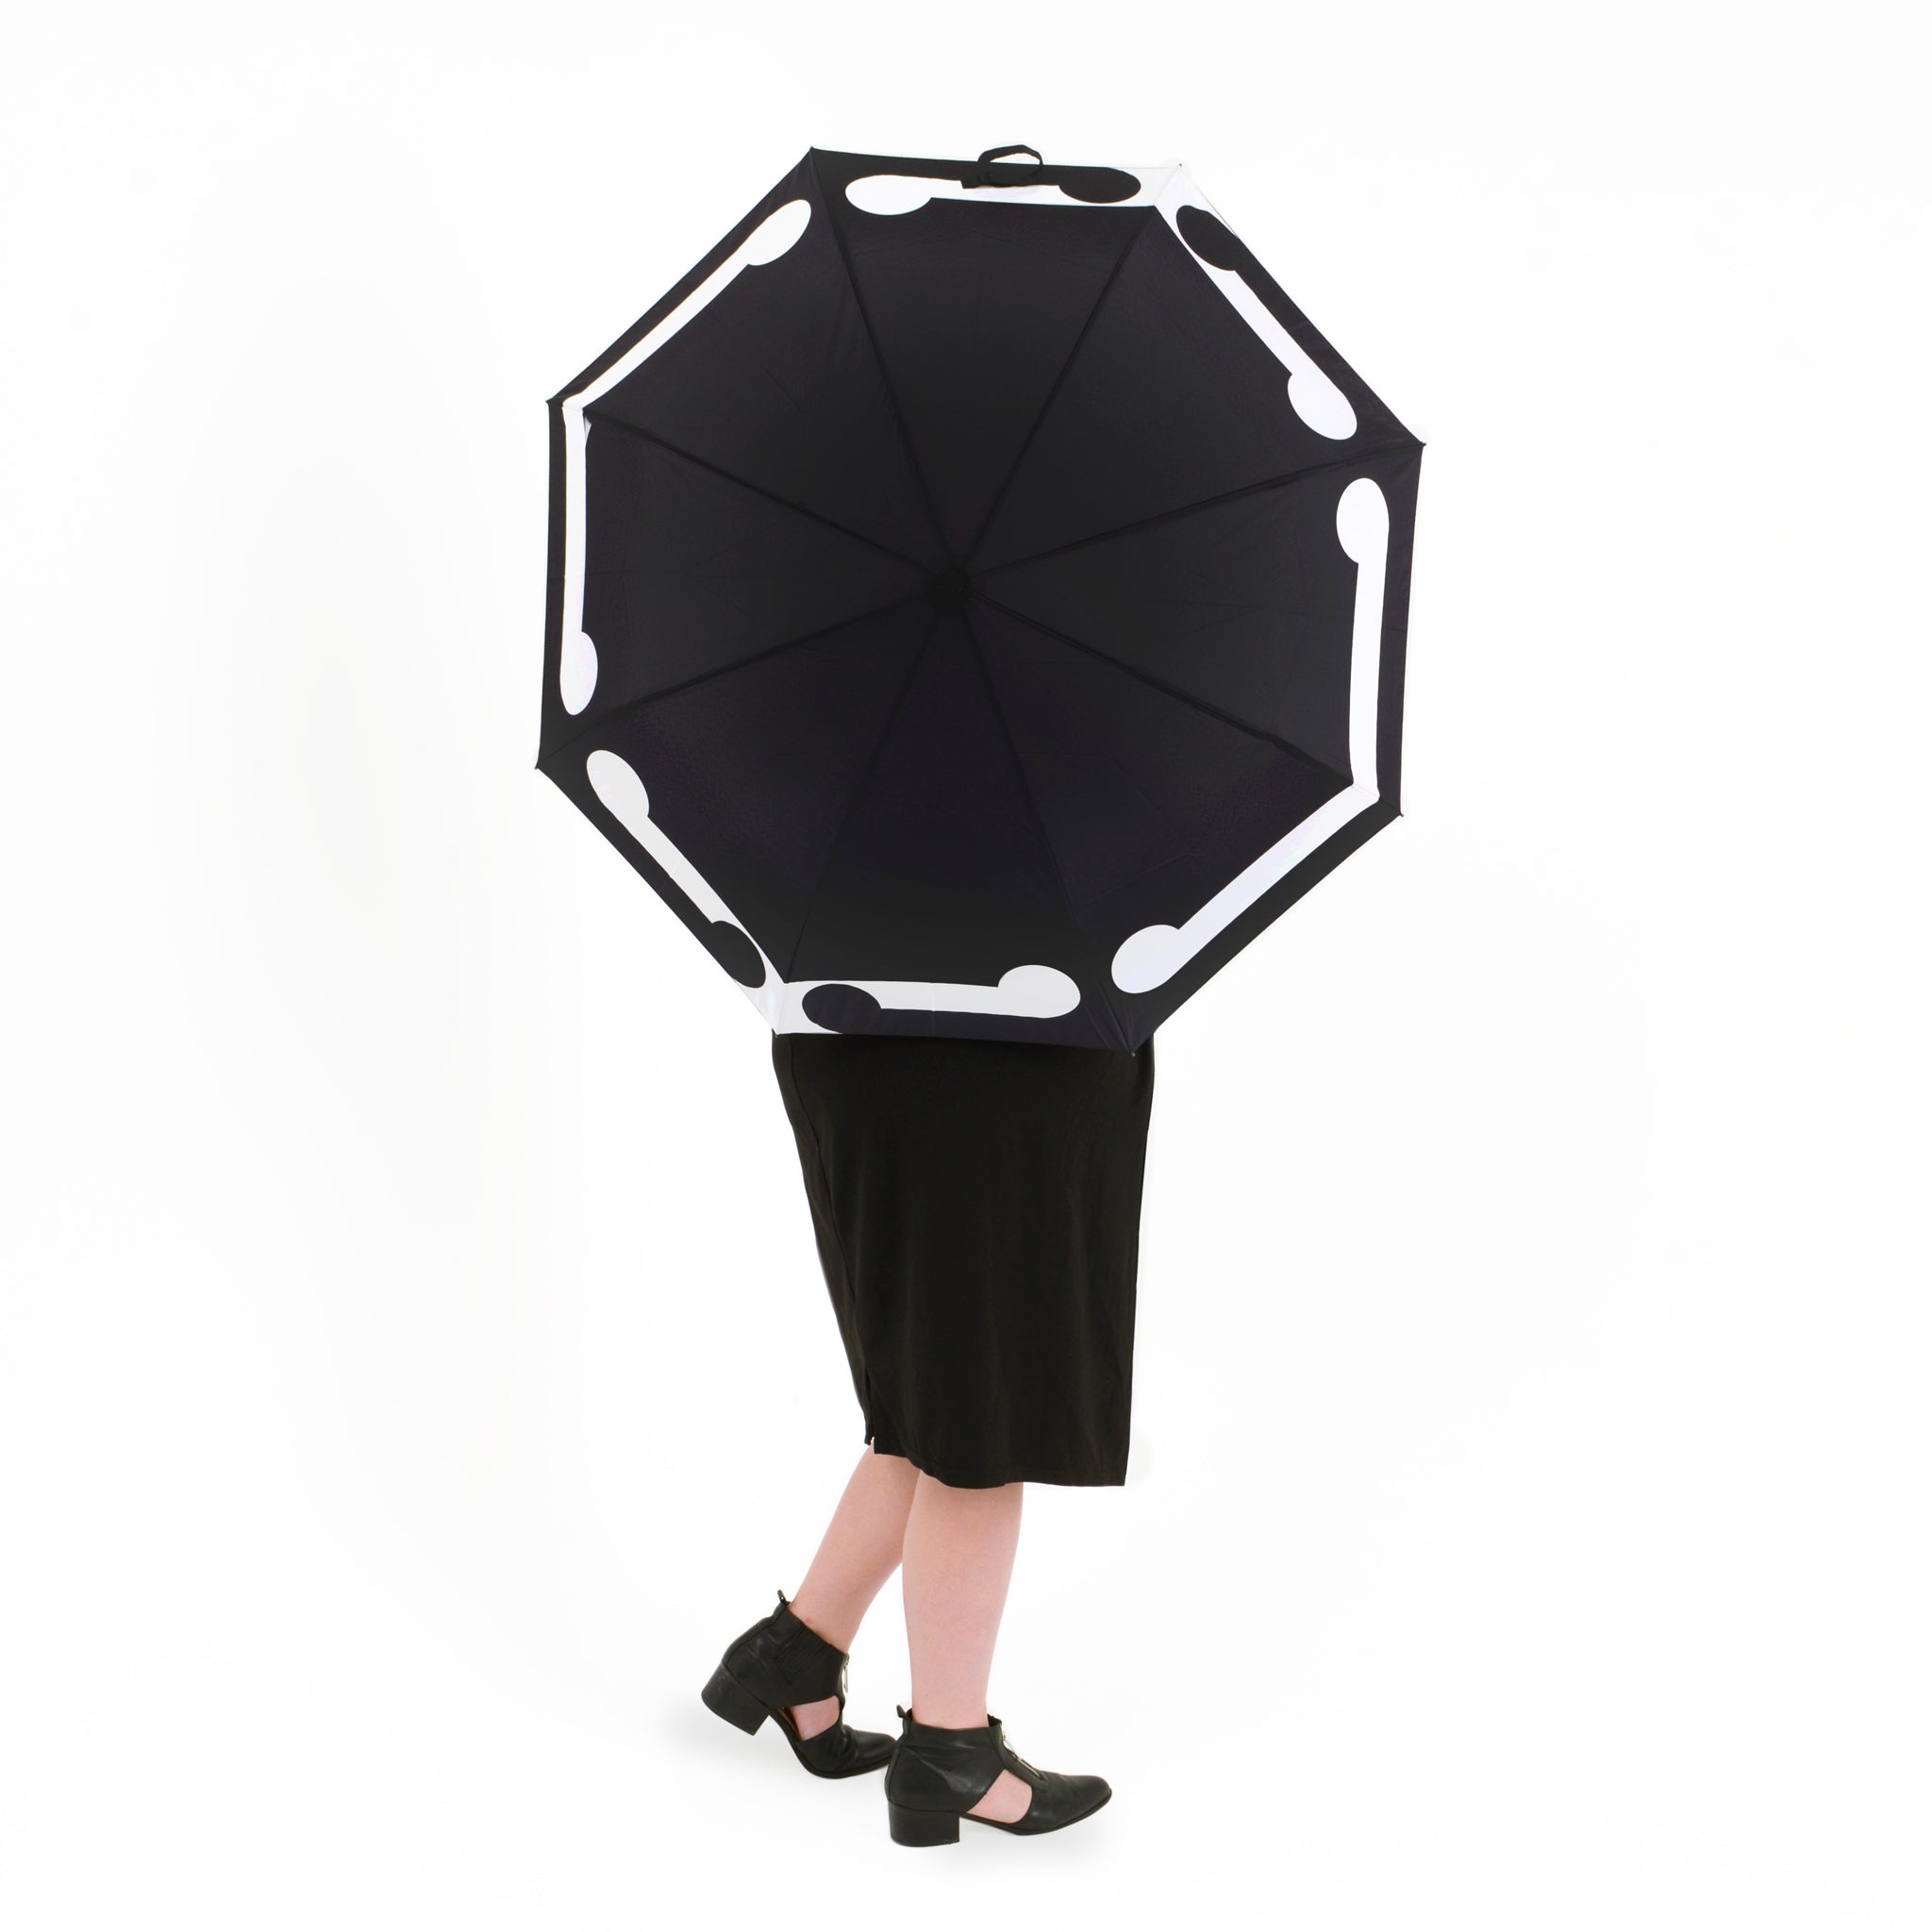 Gordon Walters Black Umbrella